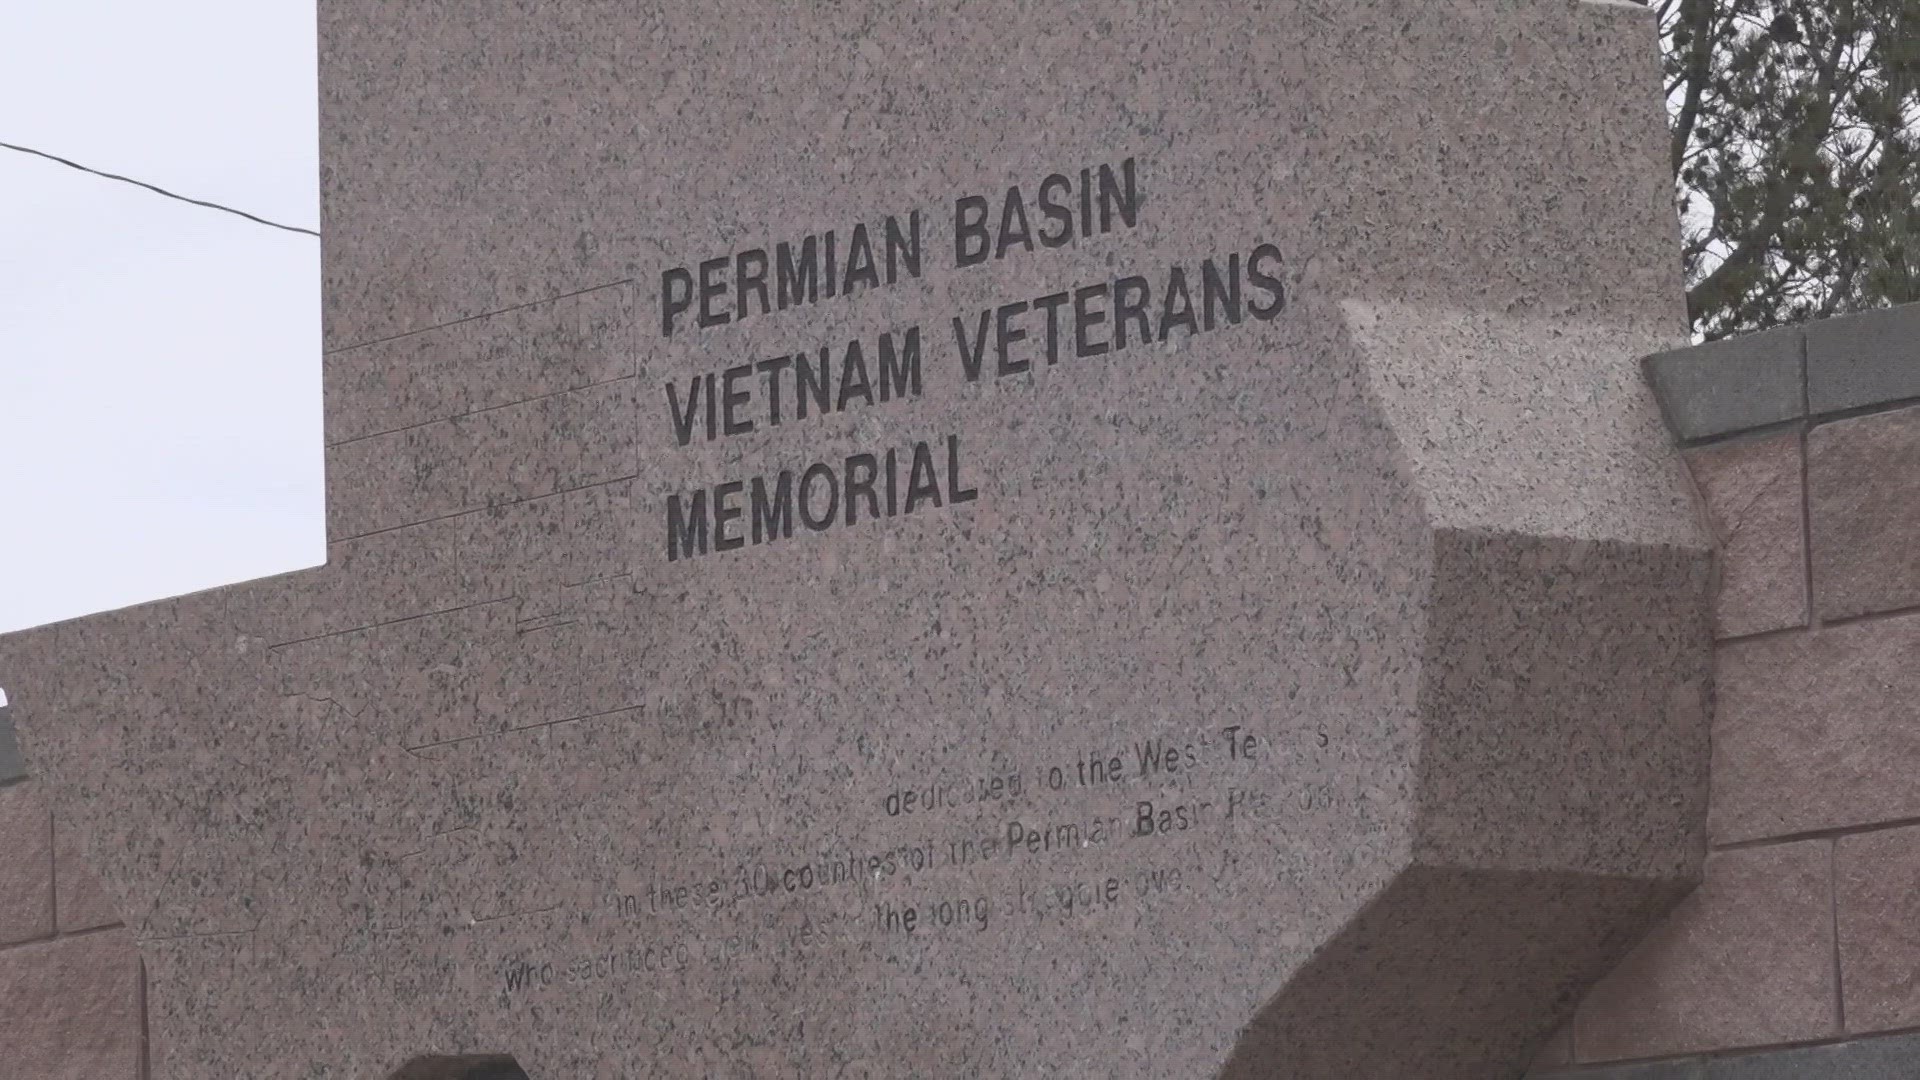 The Midland Vet Center held a ceremony at the Permian Basin Vietnam Veterans Memorial.